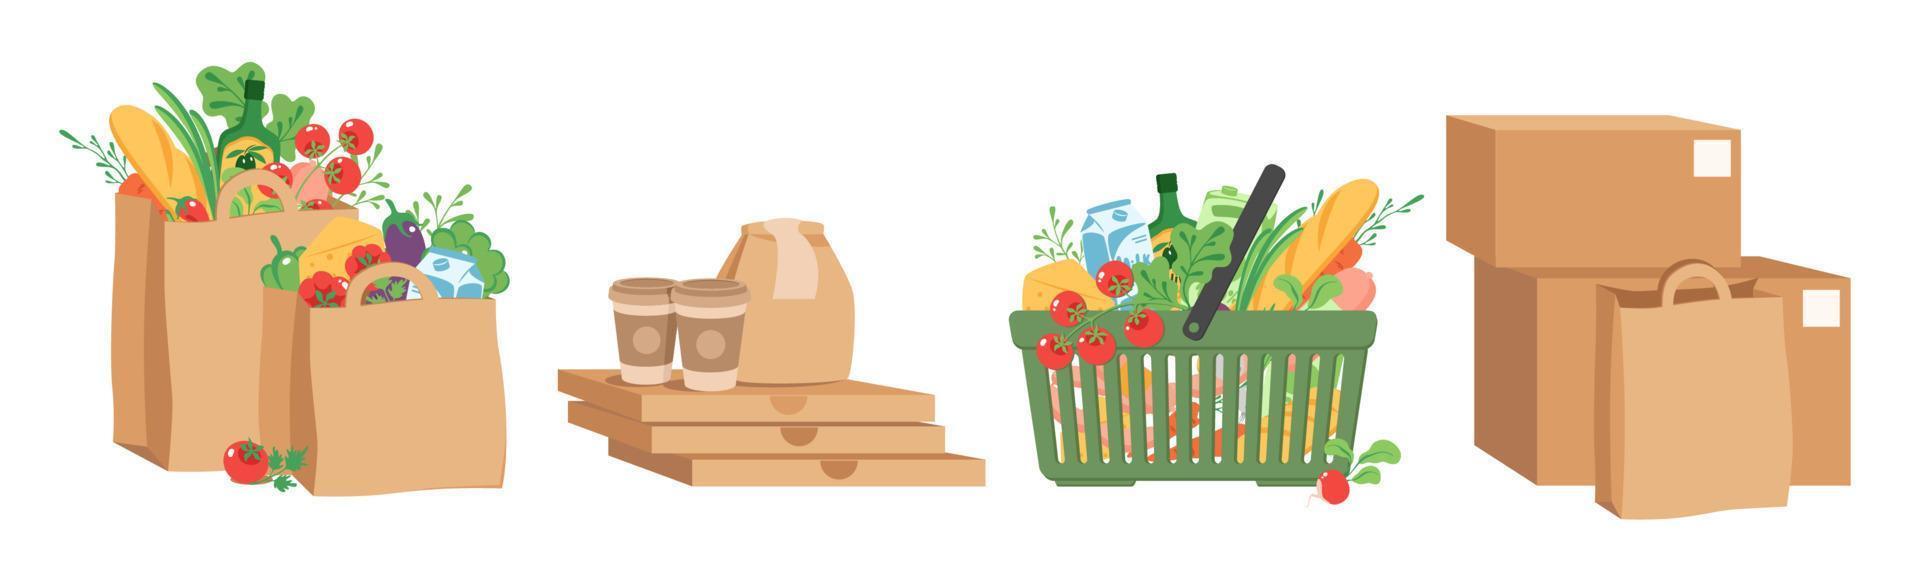 Lebensmitteleinkaufsset, Papiertüten mit Produkten, Lebensmittelkorb, Fast Food, Kartons. Vektor-Illustration vektor